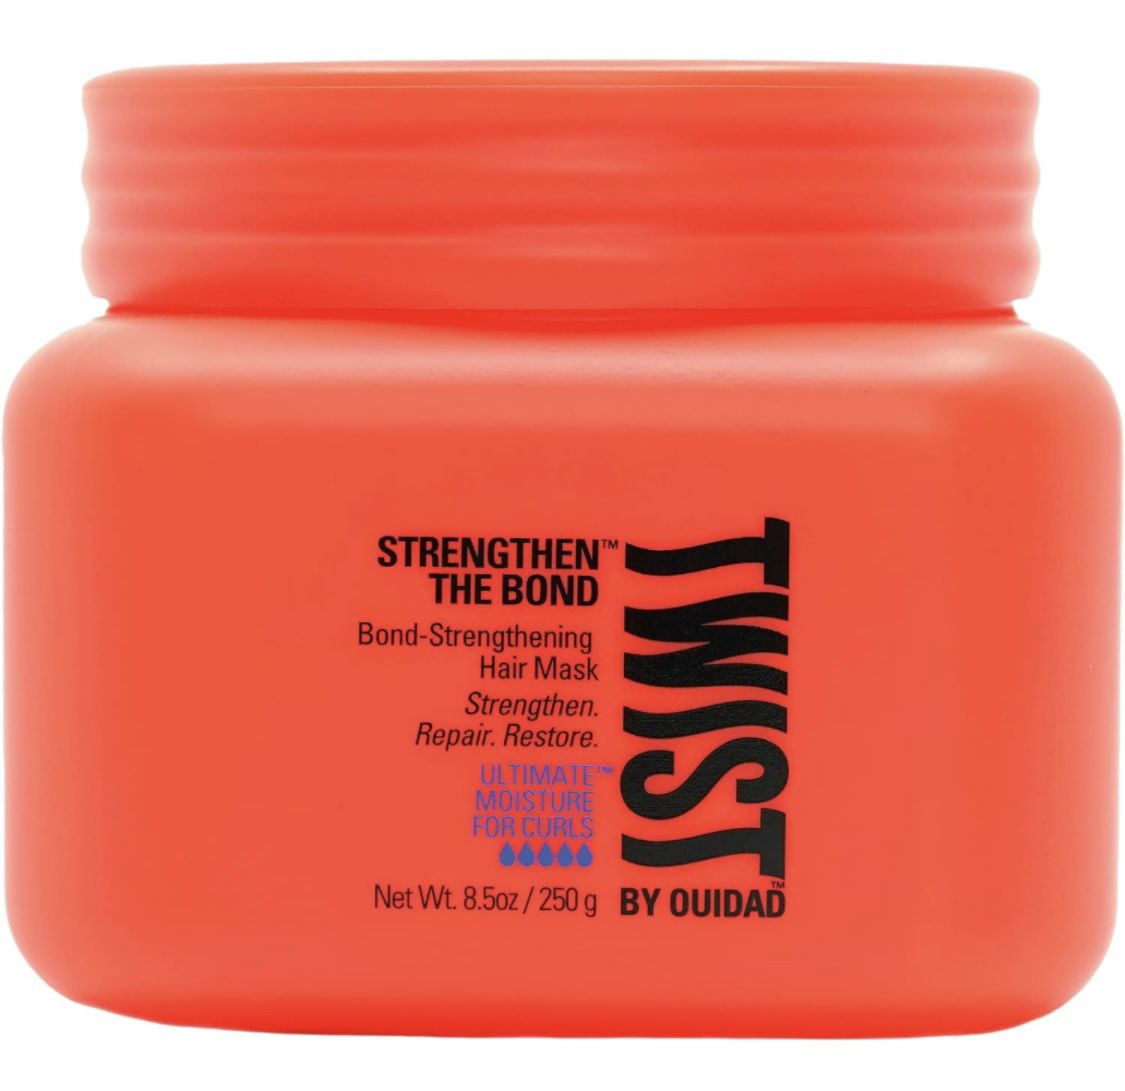 Twist Strengthen The Bond Bond-Strengthening Hair Mask, Coral